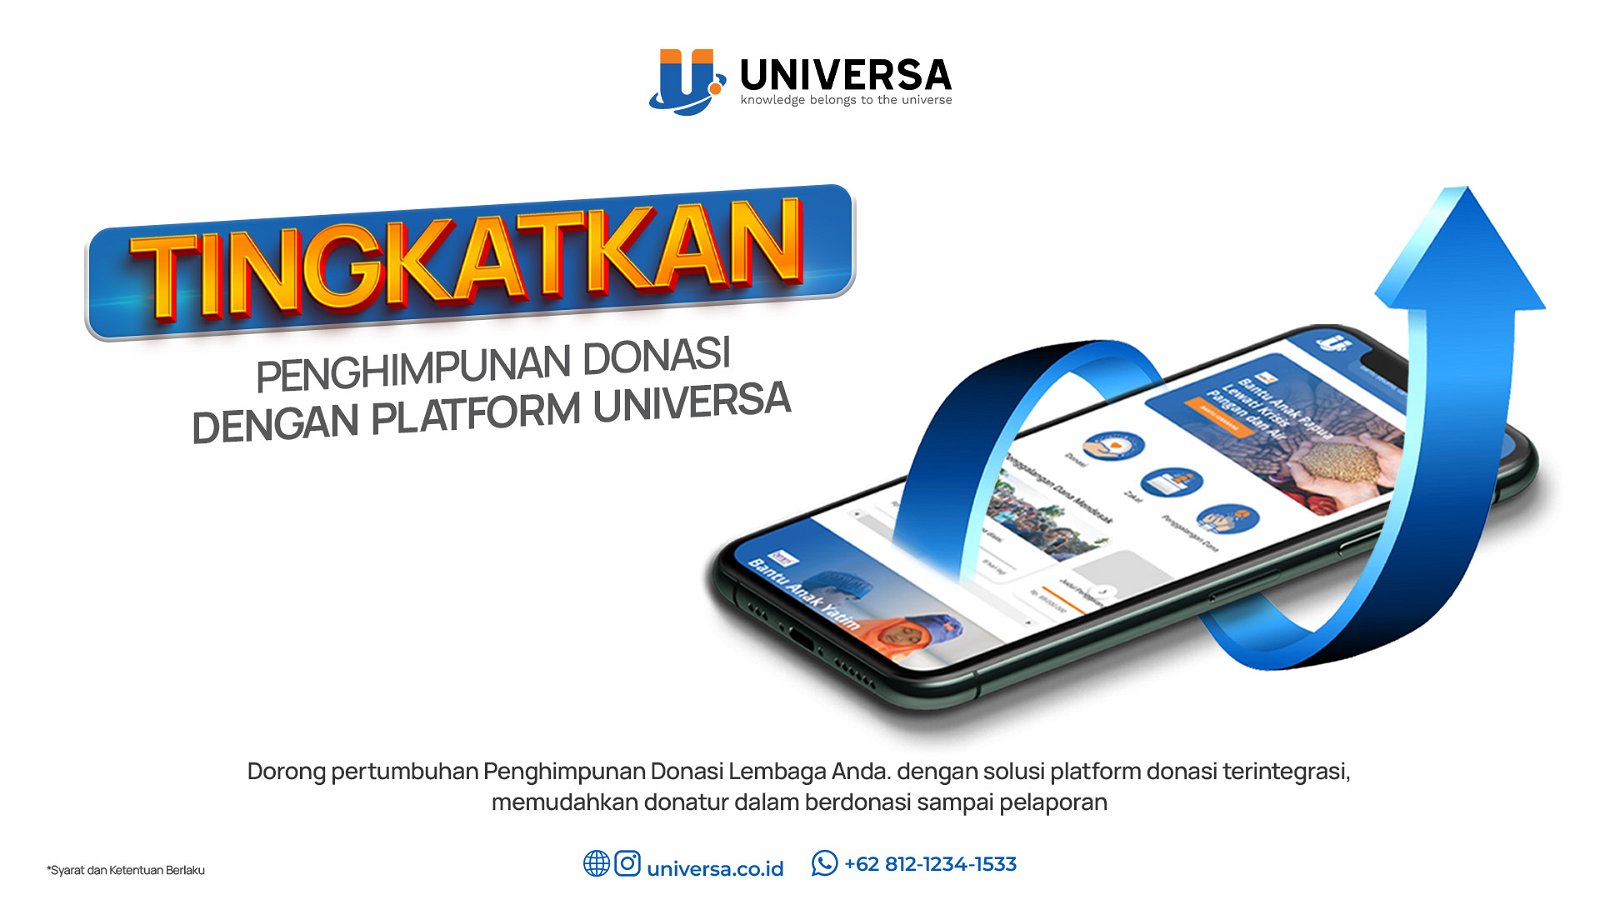 Platform Donasi Universa